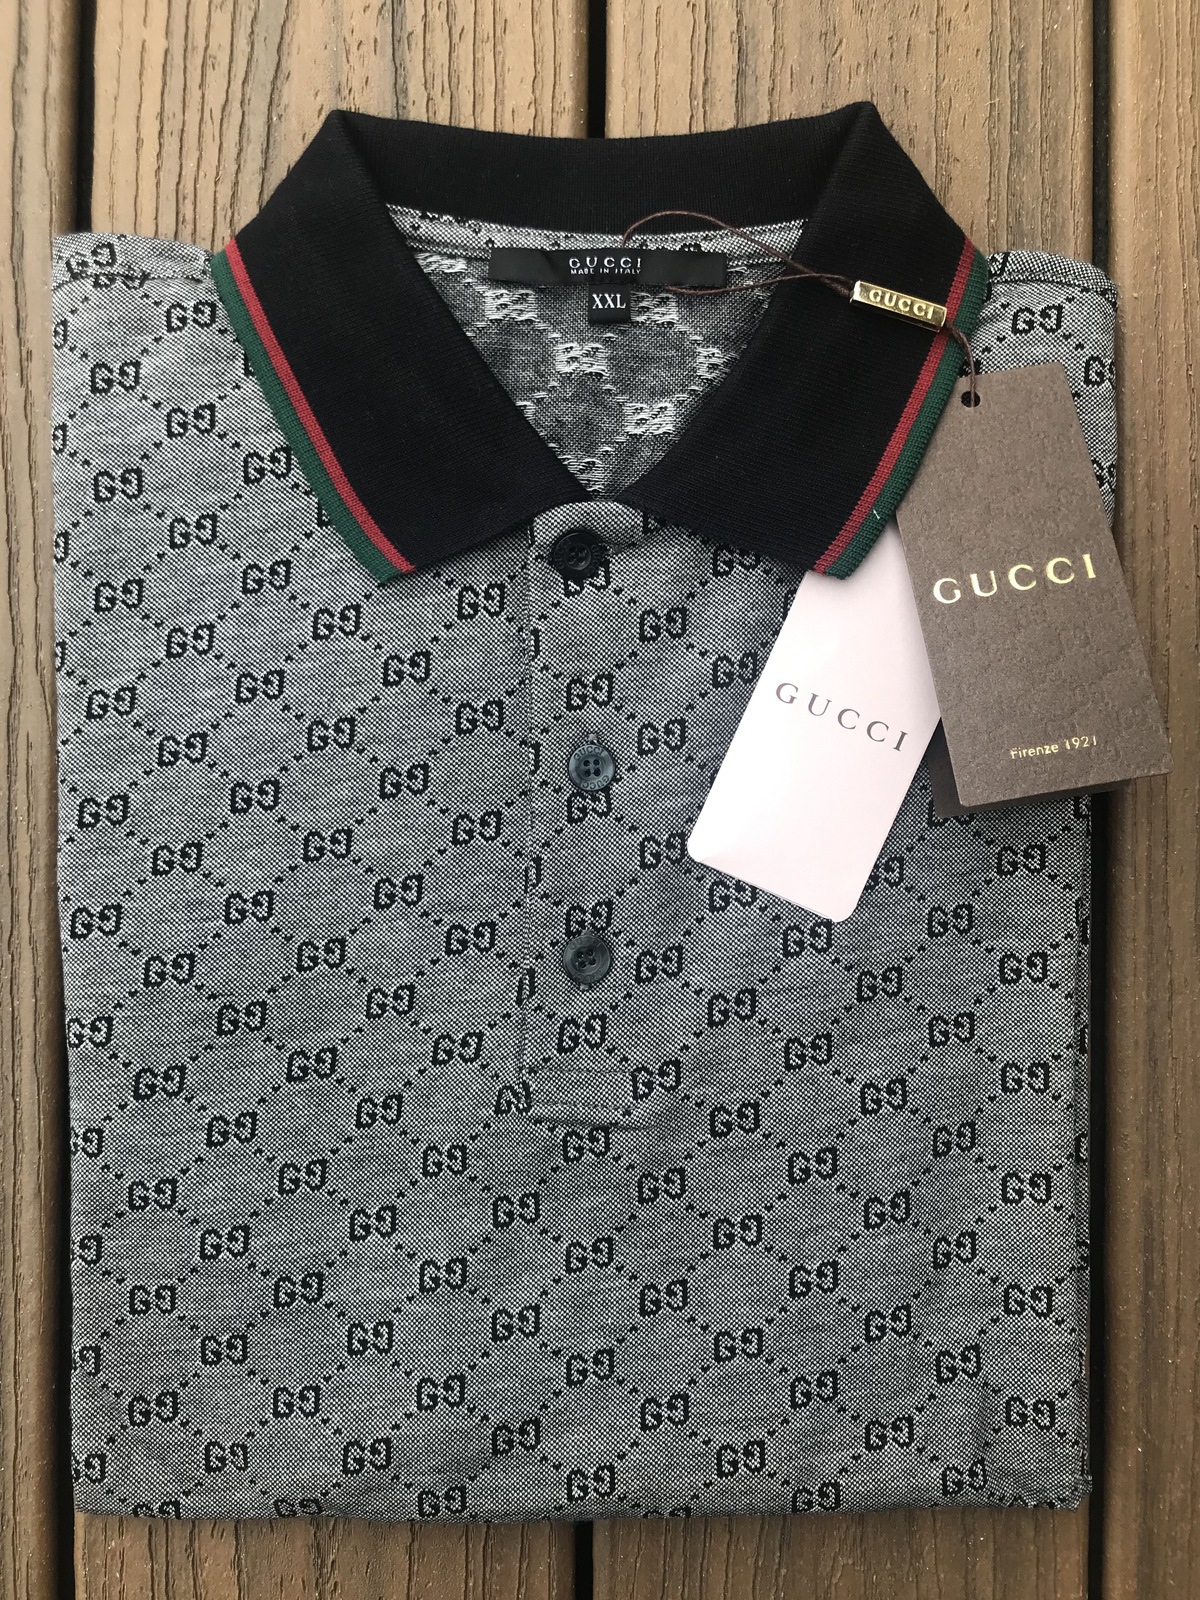 Gucci Polo Shirt: 42 customer reviews and 6 listings